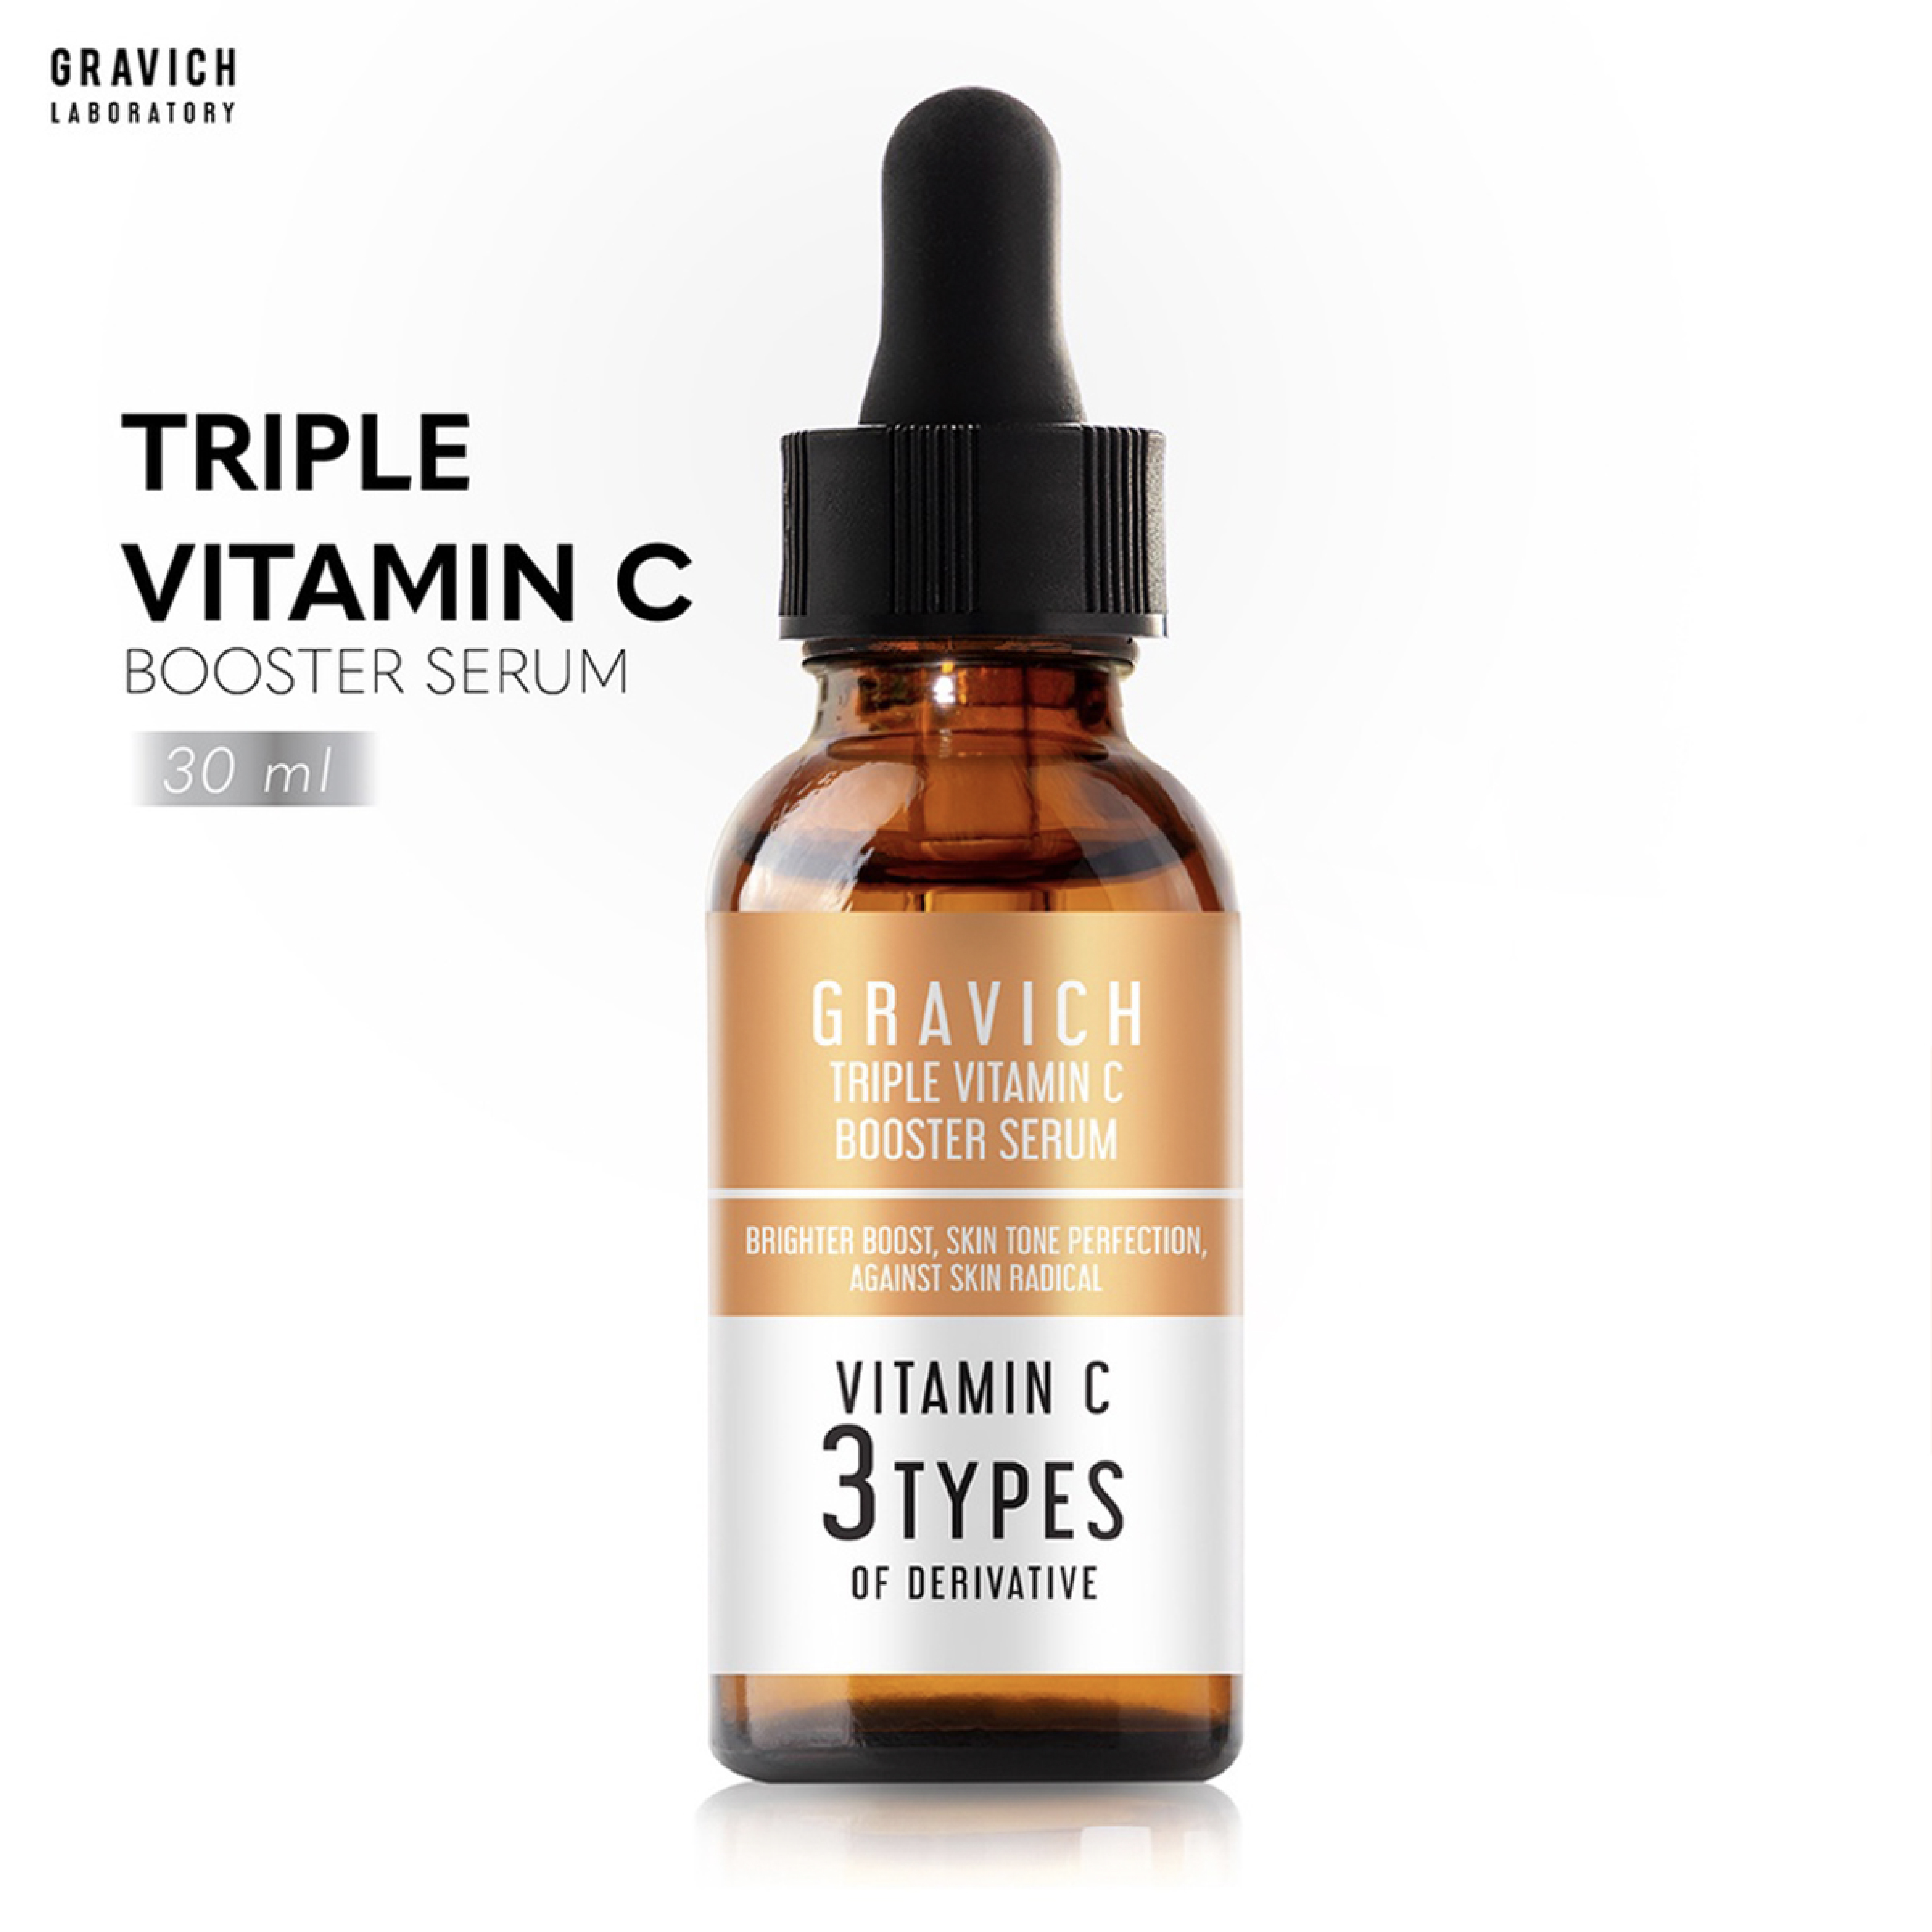 Gravich Triple Vitamin C Booster Serum 30 ml